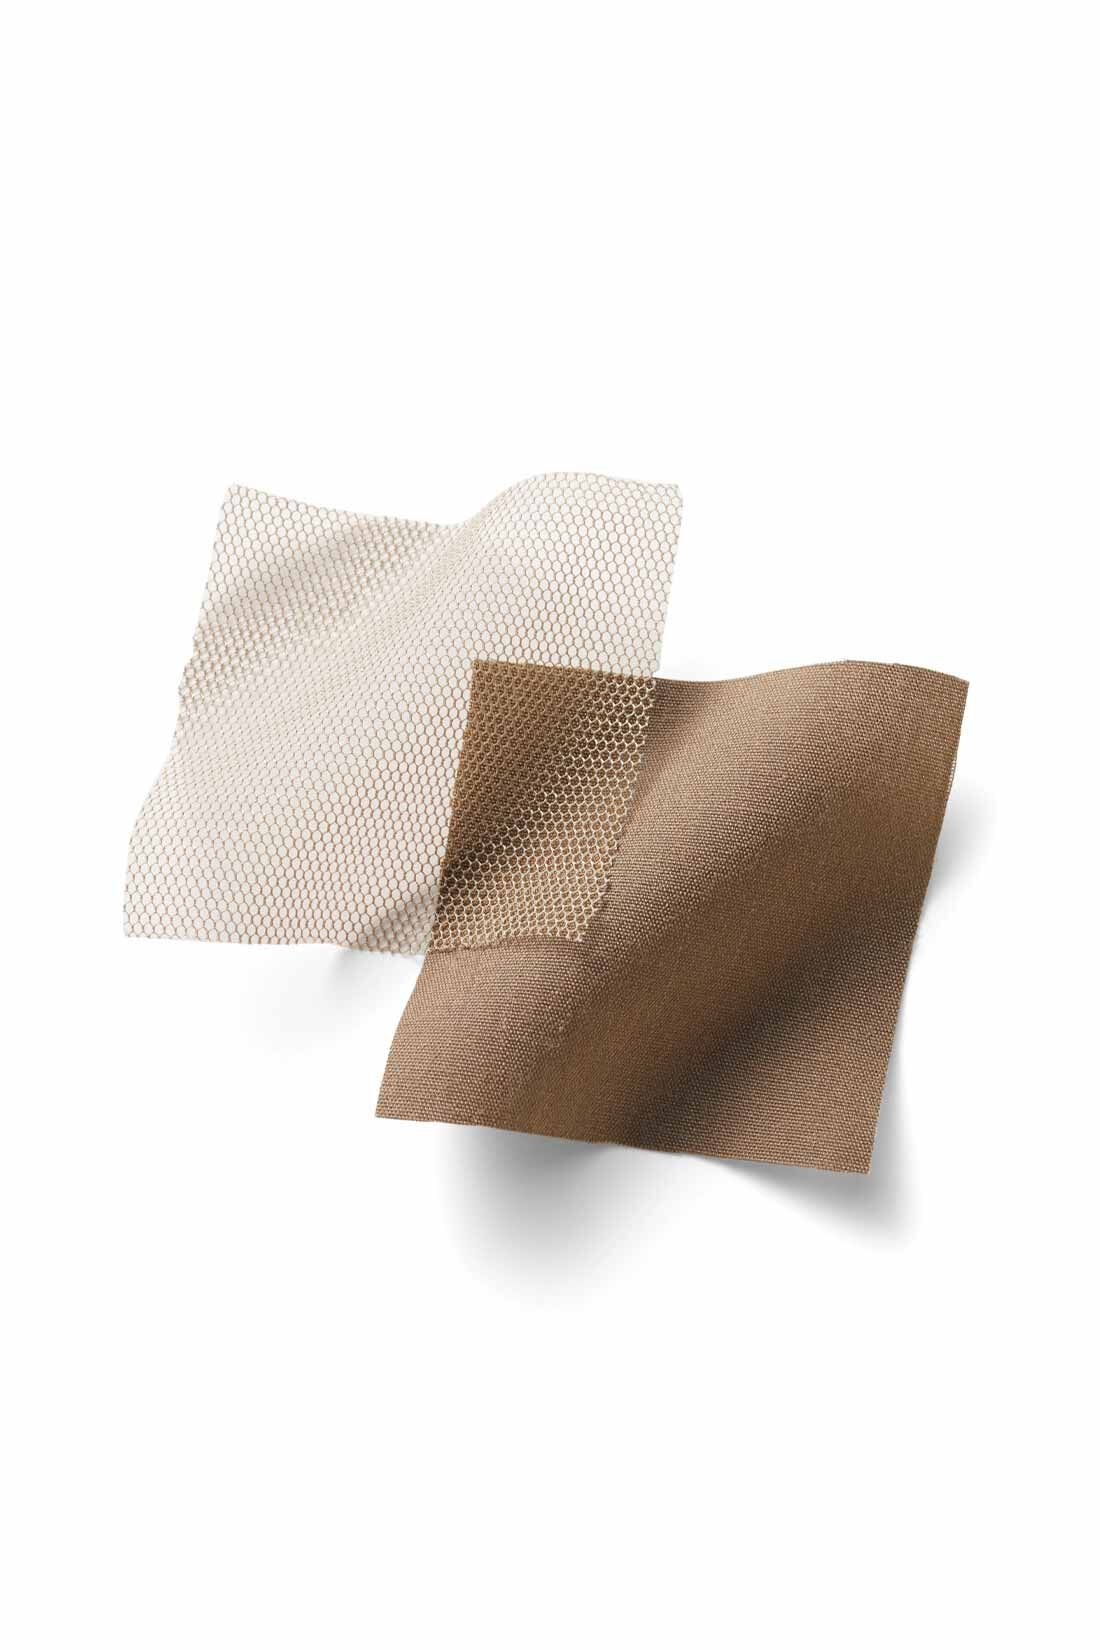 DRECO by IEDIT|【3～10日でお届け】IEDIT[イディット]　プリーツデザインのチュールレイヤードスカート〈ブラック〉|きれいな透け感のあるチュール素材と、プリーツ加工をほどこした布はくの2枚仕立て。　※お届けするカラーとは異なります。